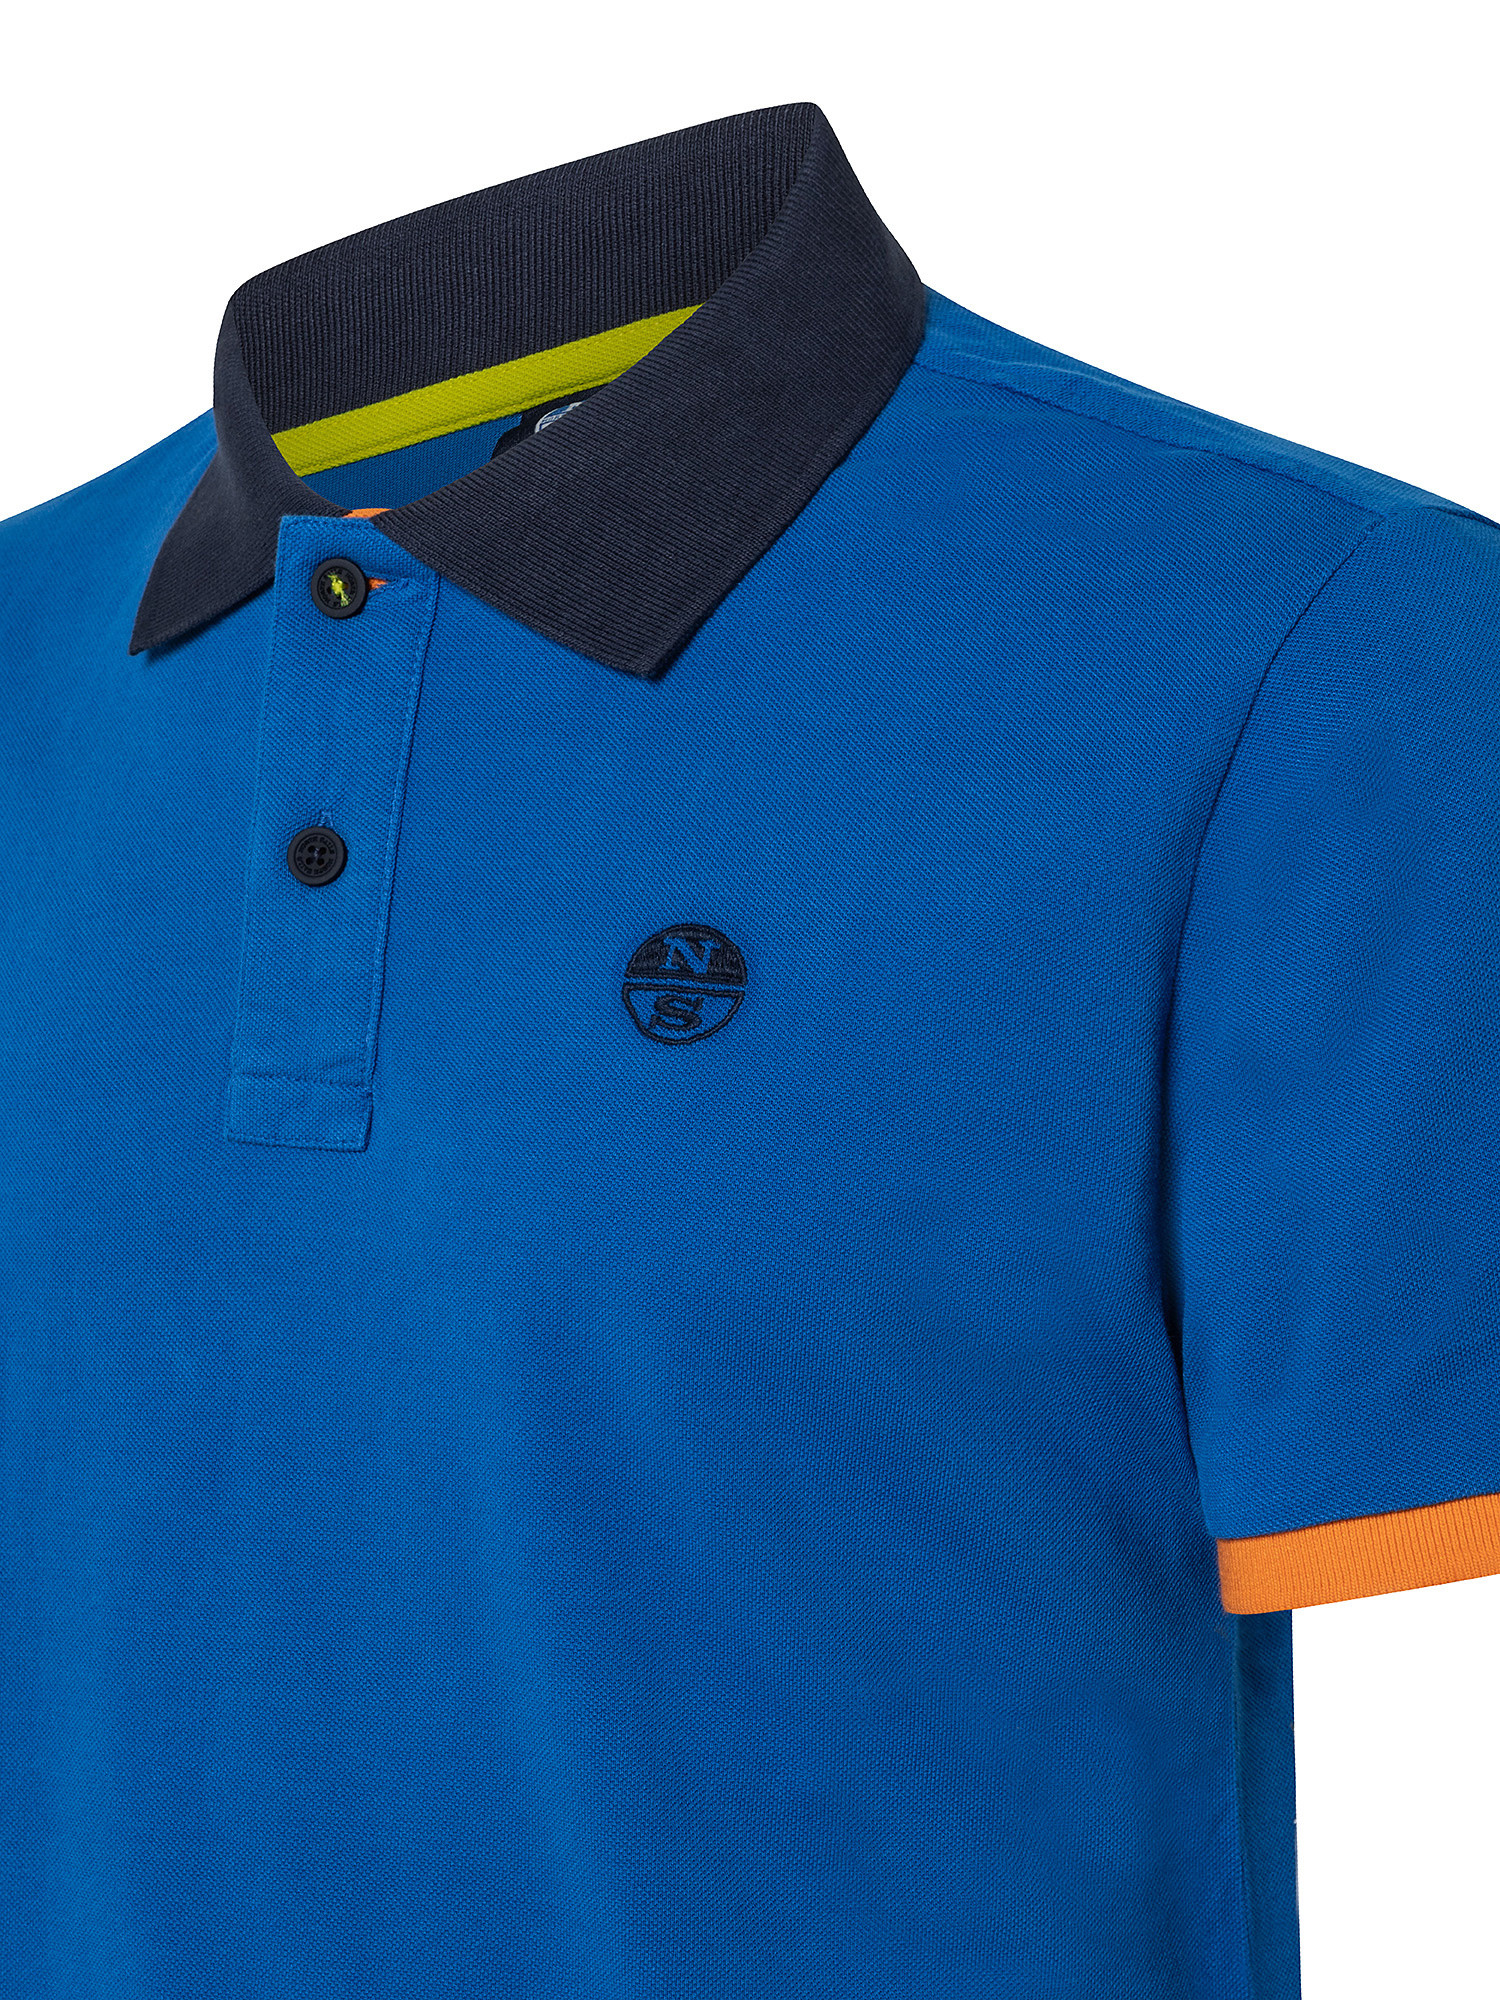 Polo manica corta con logo, Blu, large image number 2